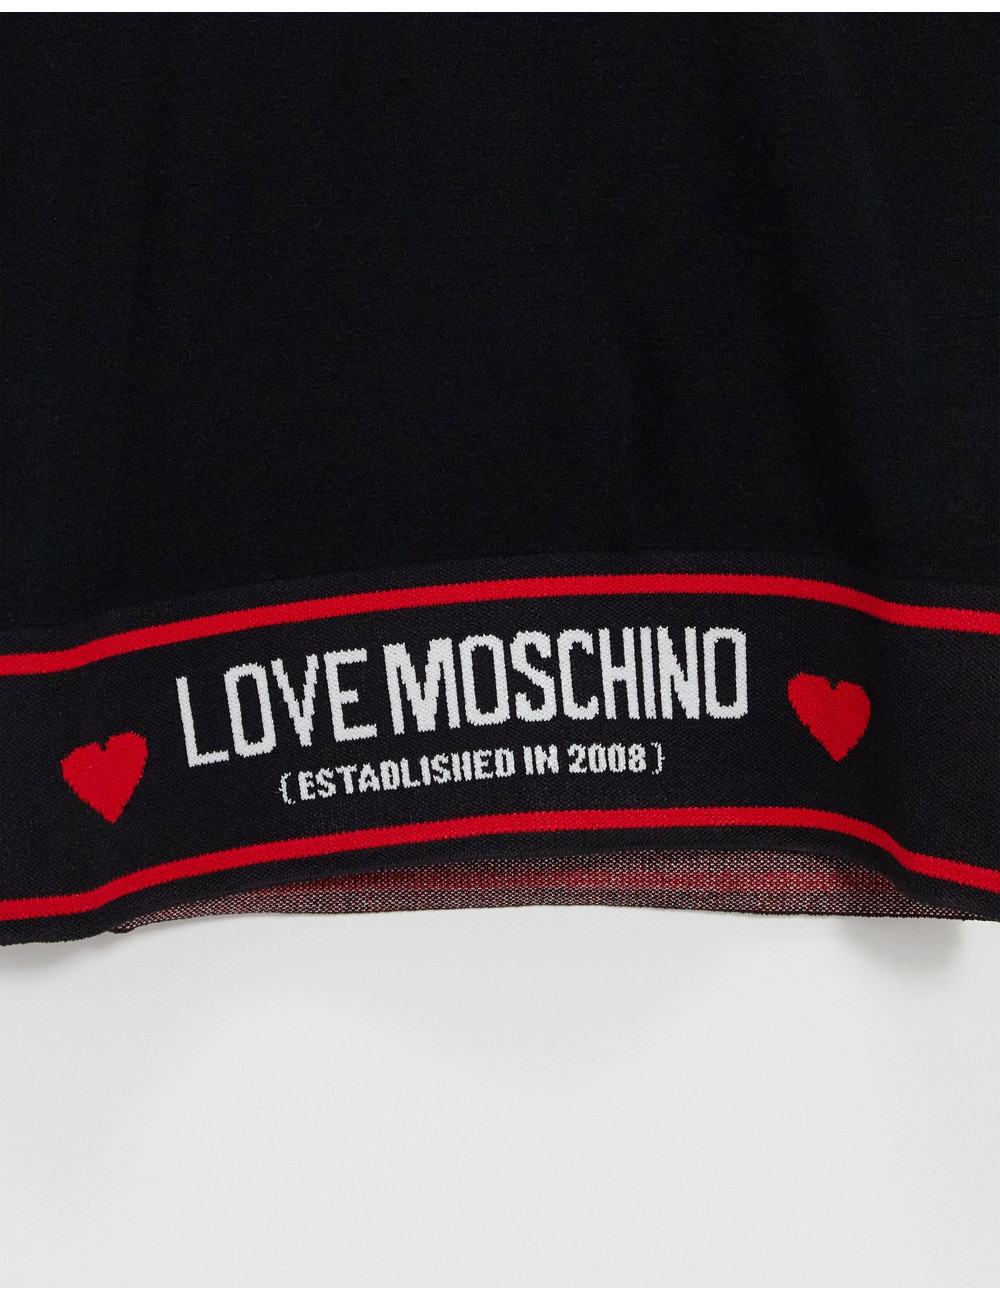 Love Moschino fascia logo...